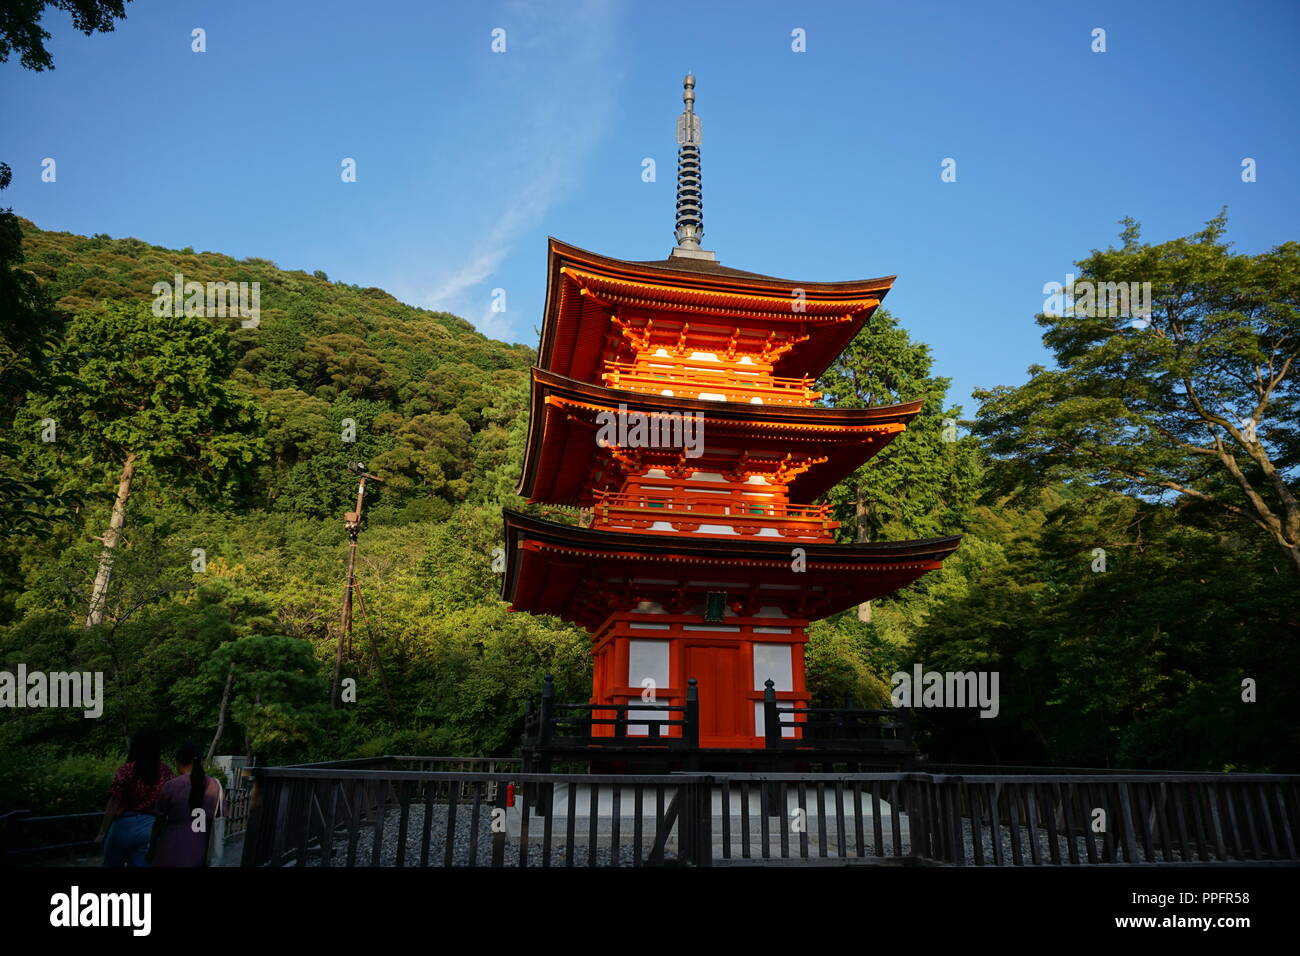 Kyoto, Japan - August 01, 2018: the Koyasu-no-to Pagoda of the Kiyomizu-dera Buddhist Temple, a UNESCO World Cultural Heritage site.  Photo by: George Stock Photo